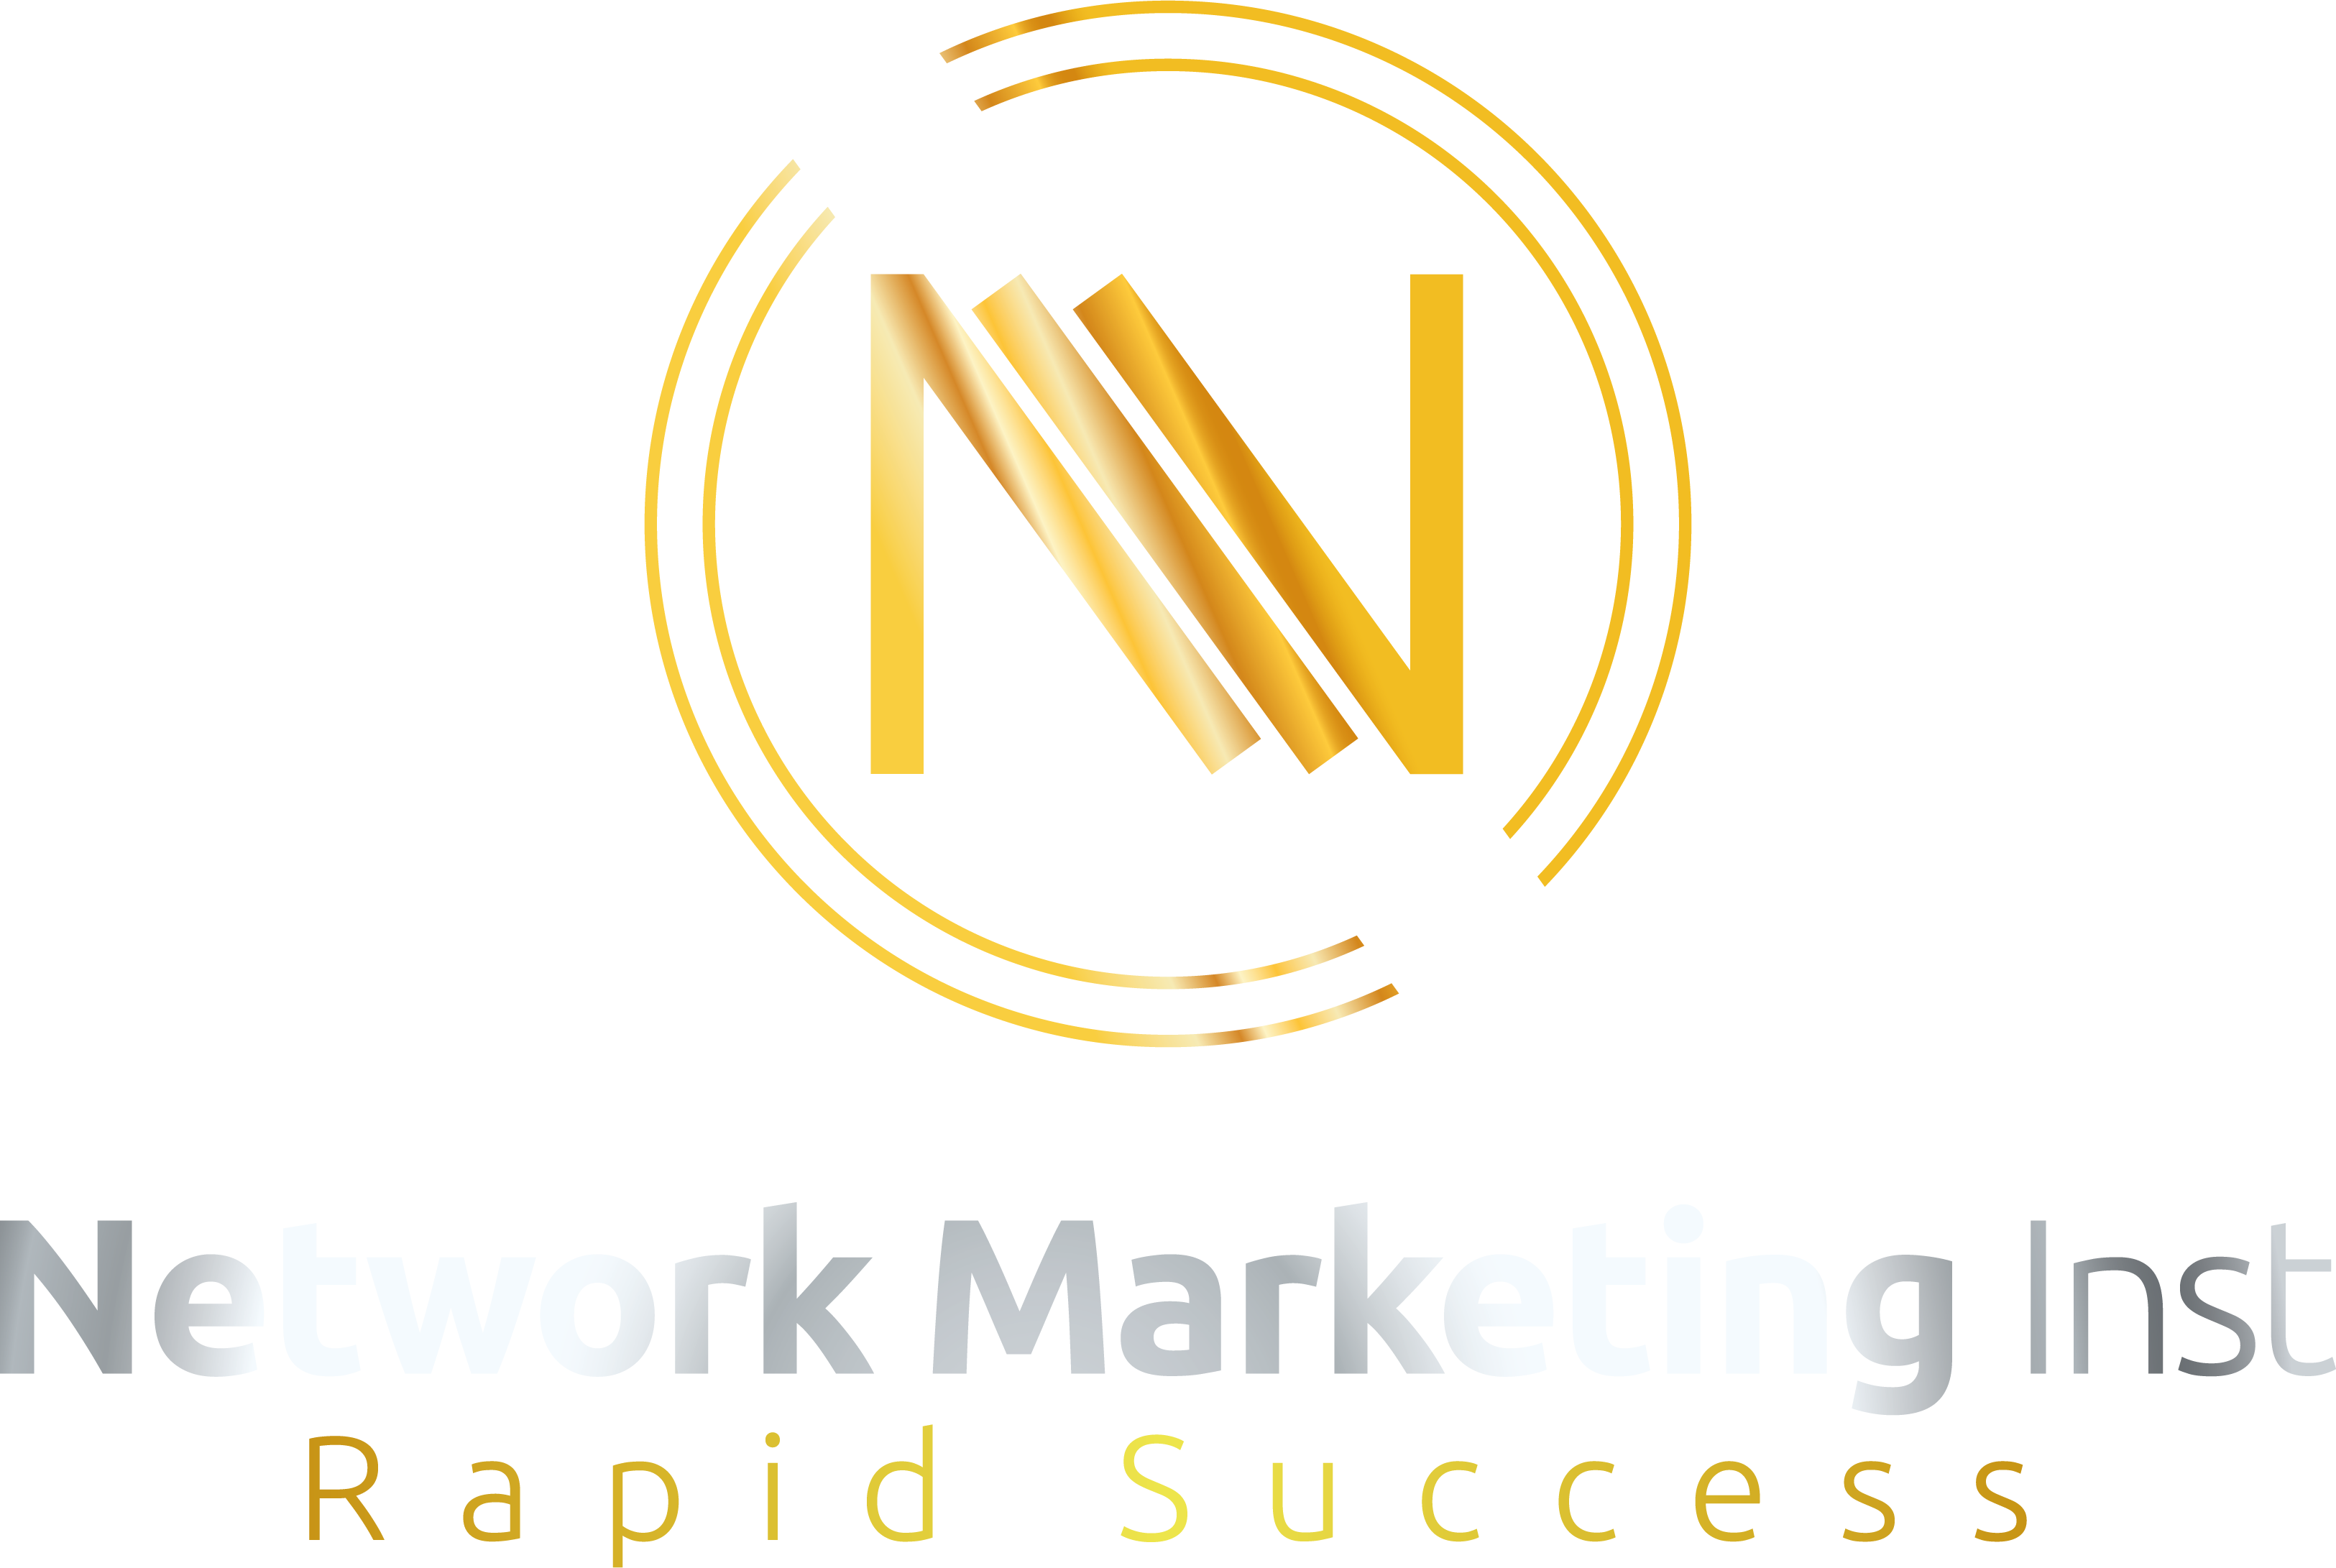 Network Marketing - Summation